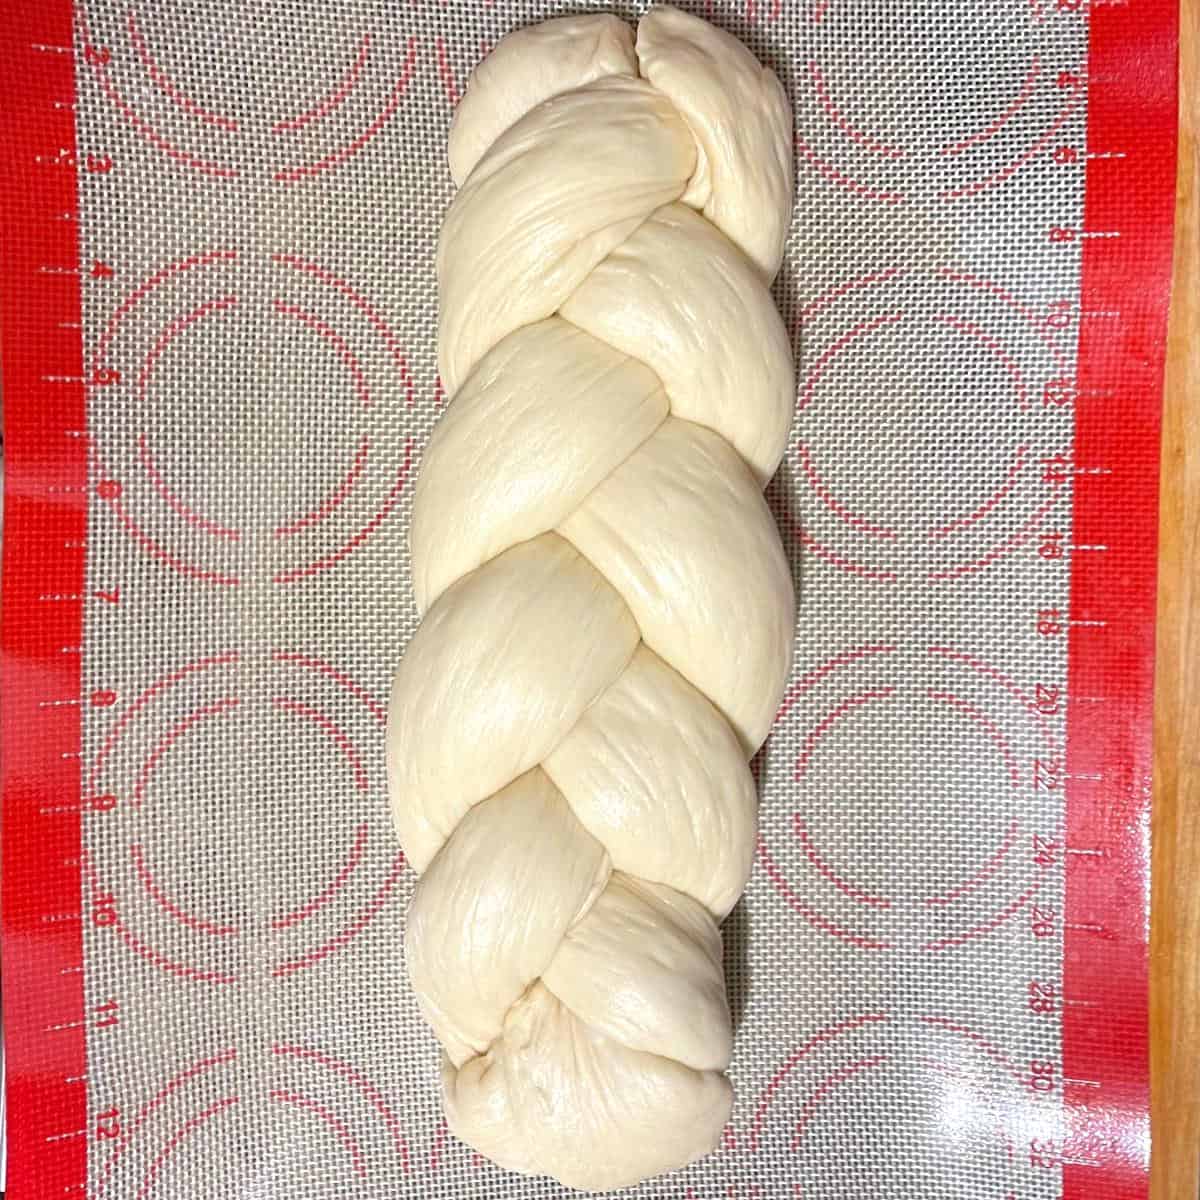 Vegan challah bread after braiding on silpat sheet.